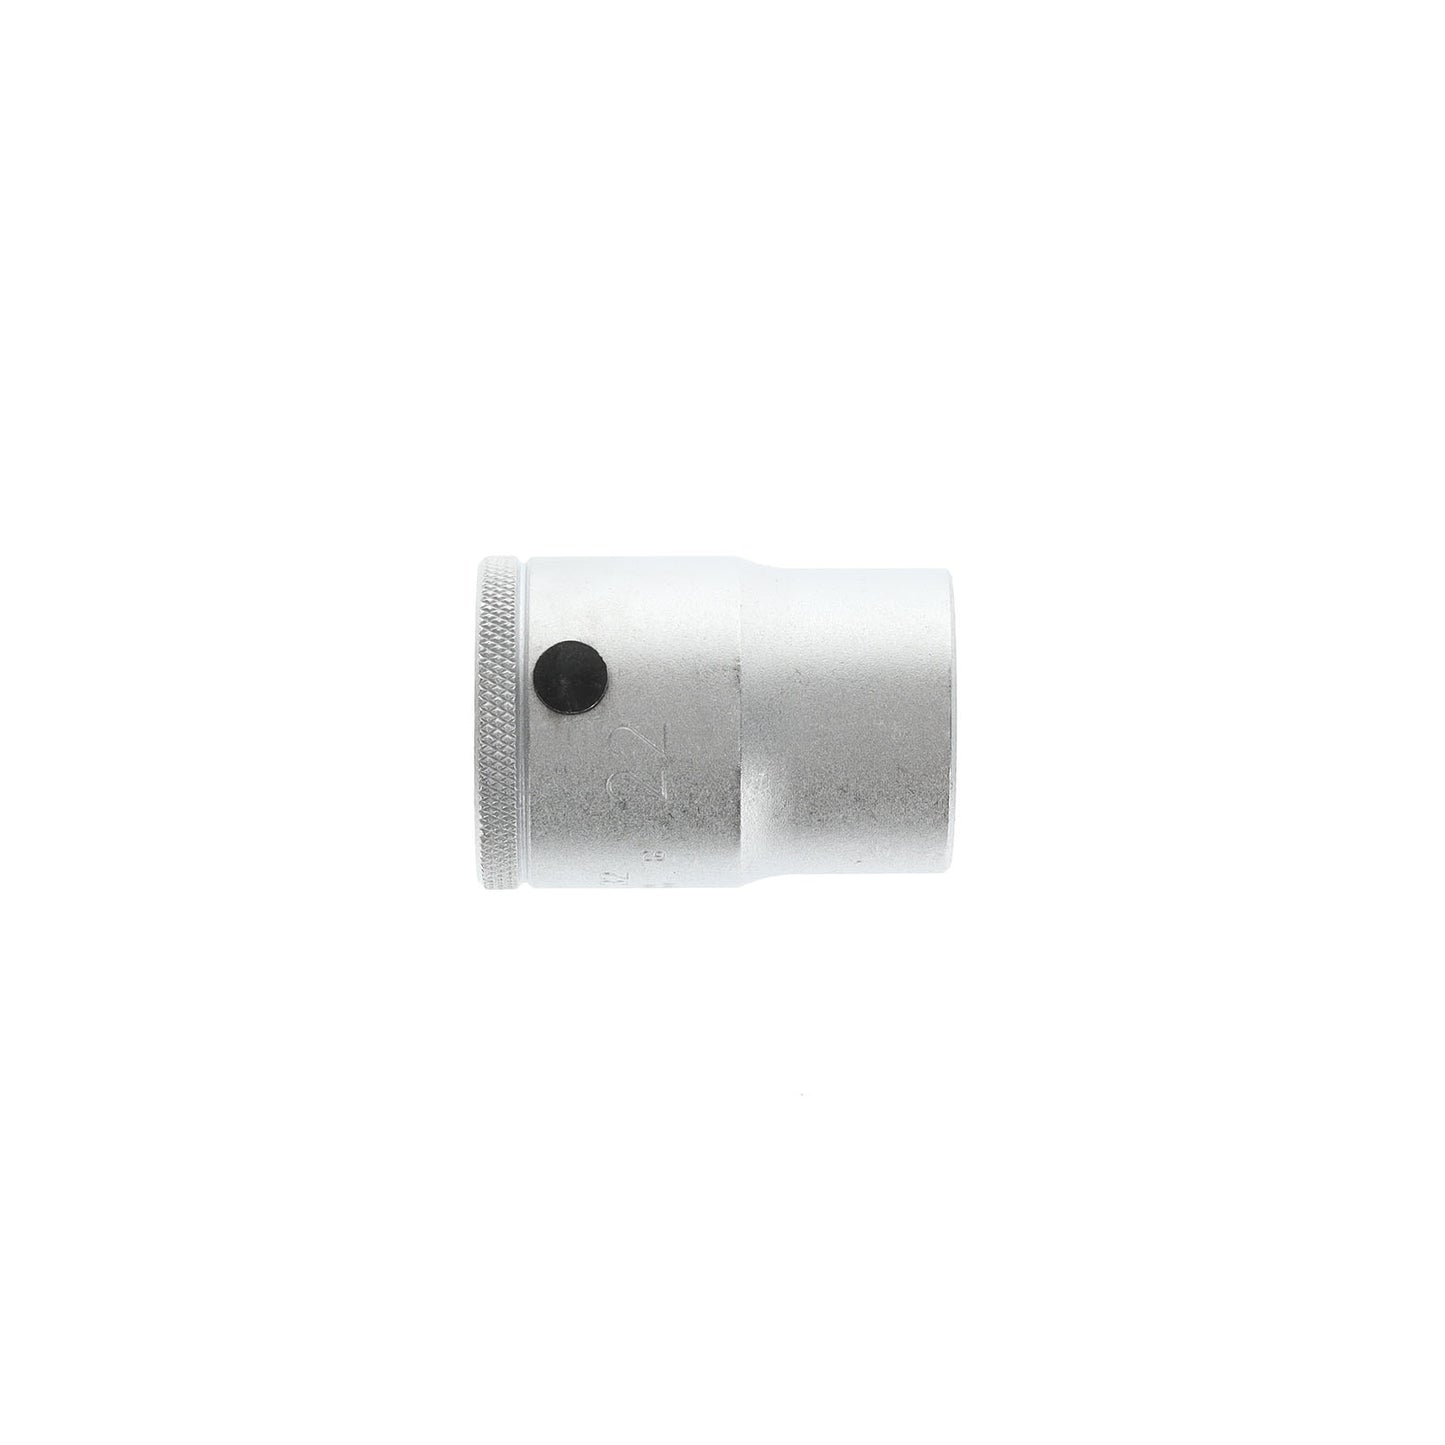 GEDORE 32 22 - Hexagonal socket 3/4", 22 mm (6270380)